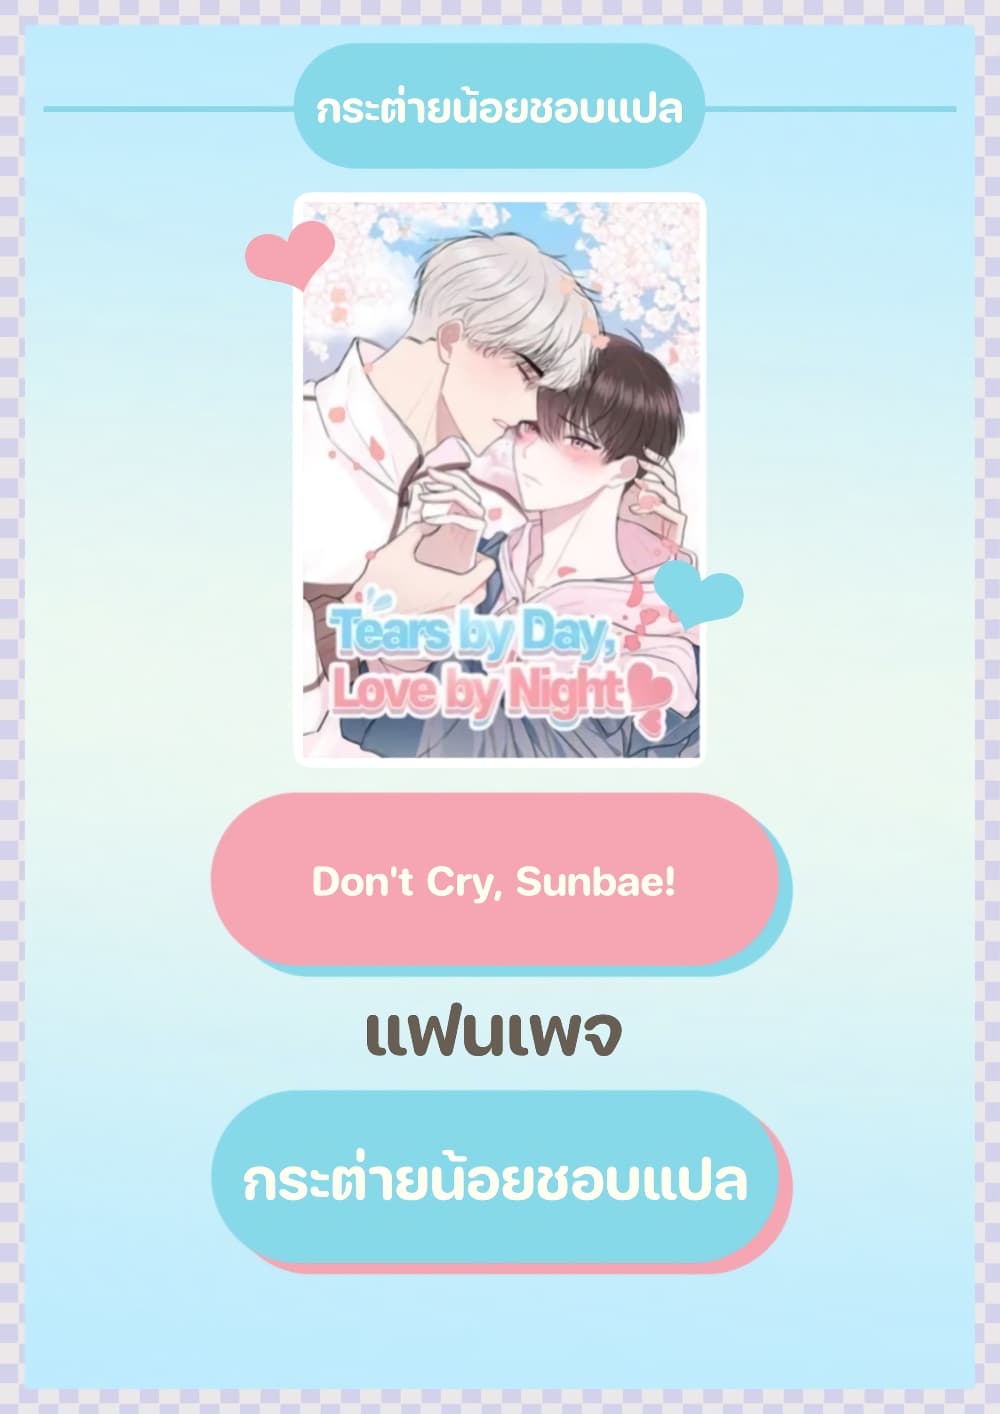 Donโ€t Cry, Sunbae! 11 (45)